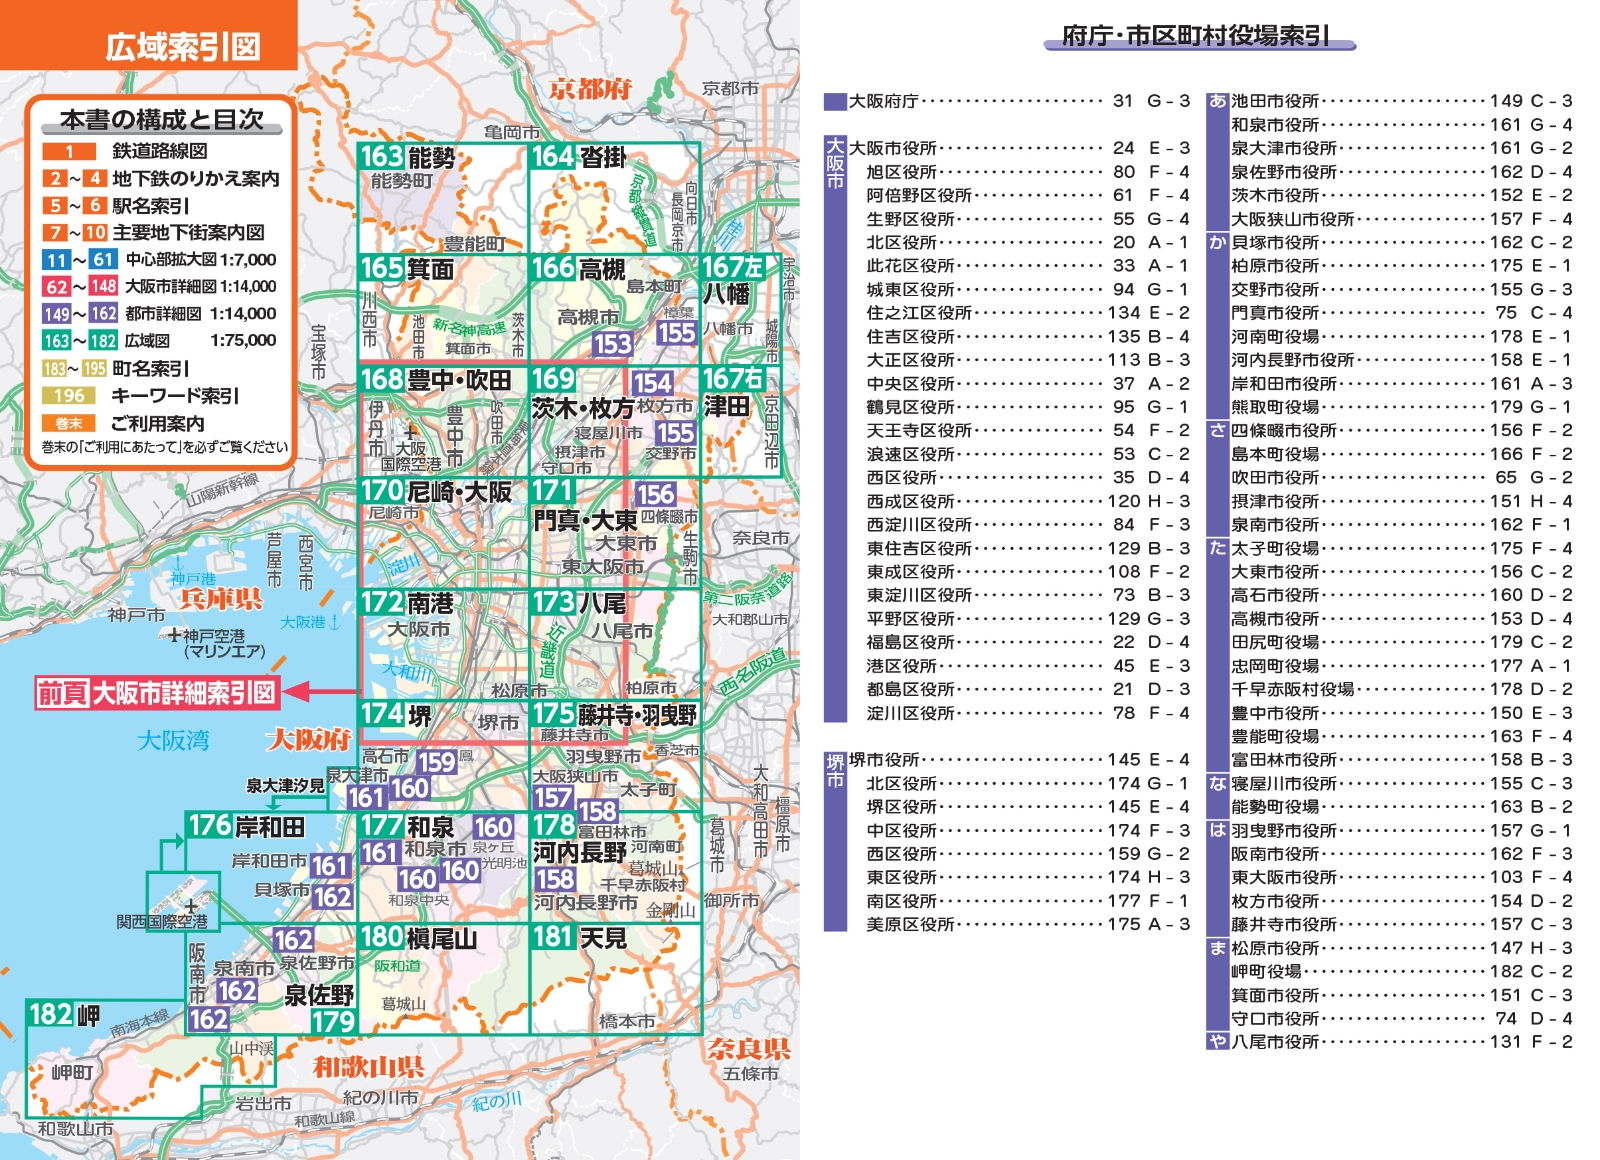 楽天ブックス 大阪詳細便利地図2版 24区 全市 本